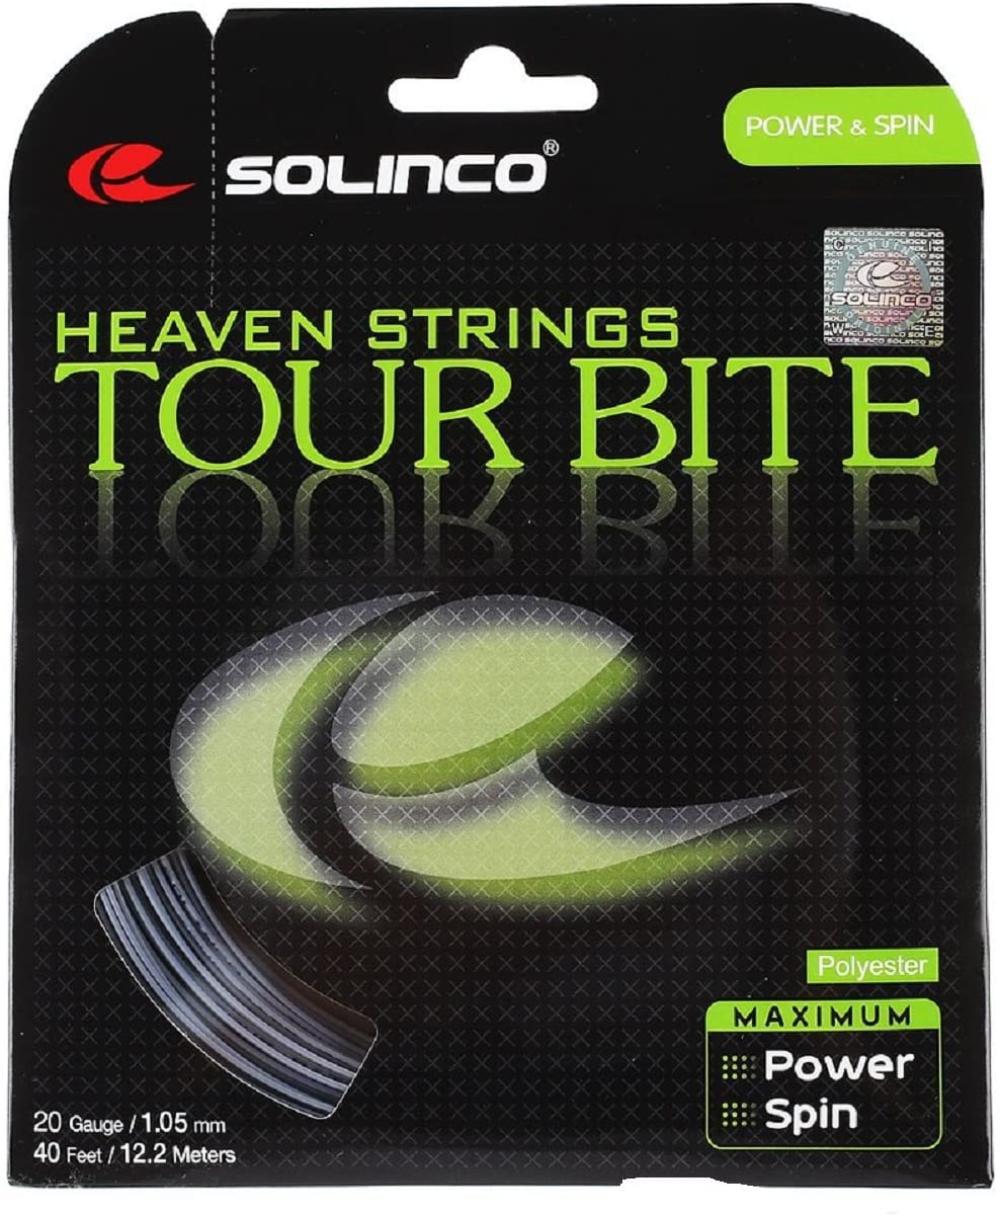 2 Packs Solinco Tour Bite 20 g 1.05 mm Tennis String 